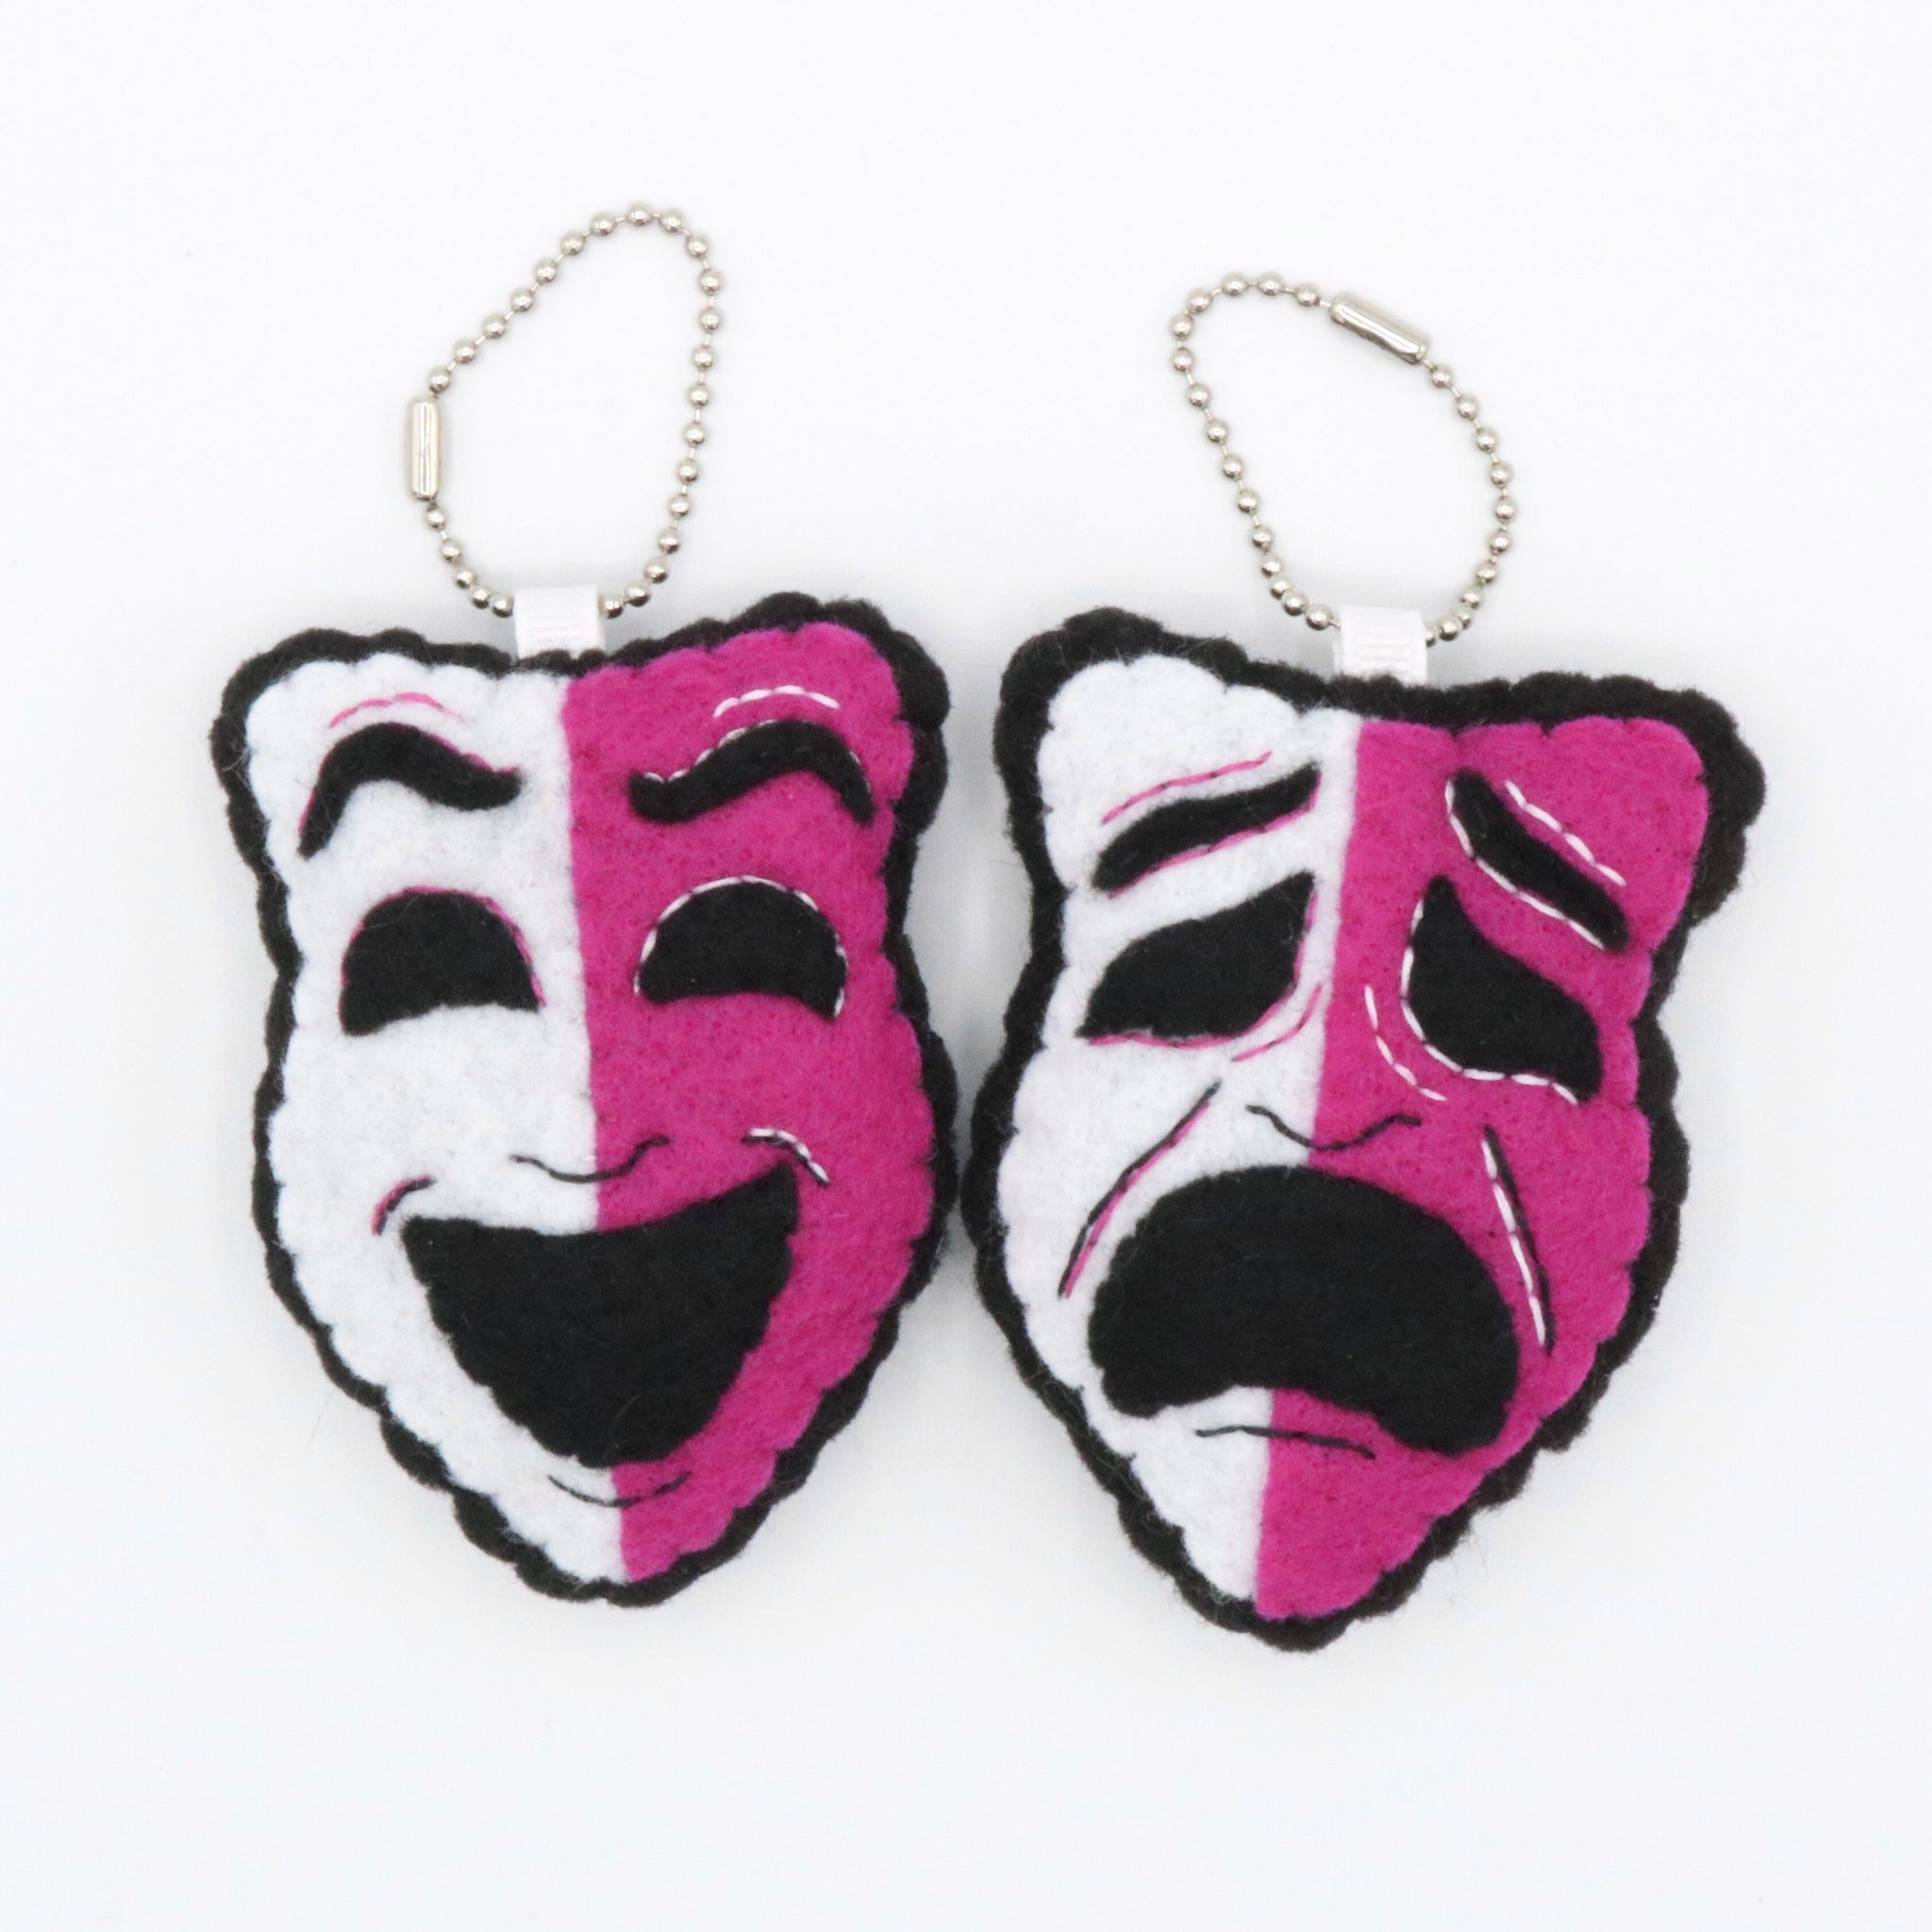 Past Custom Order: Broadway Masks